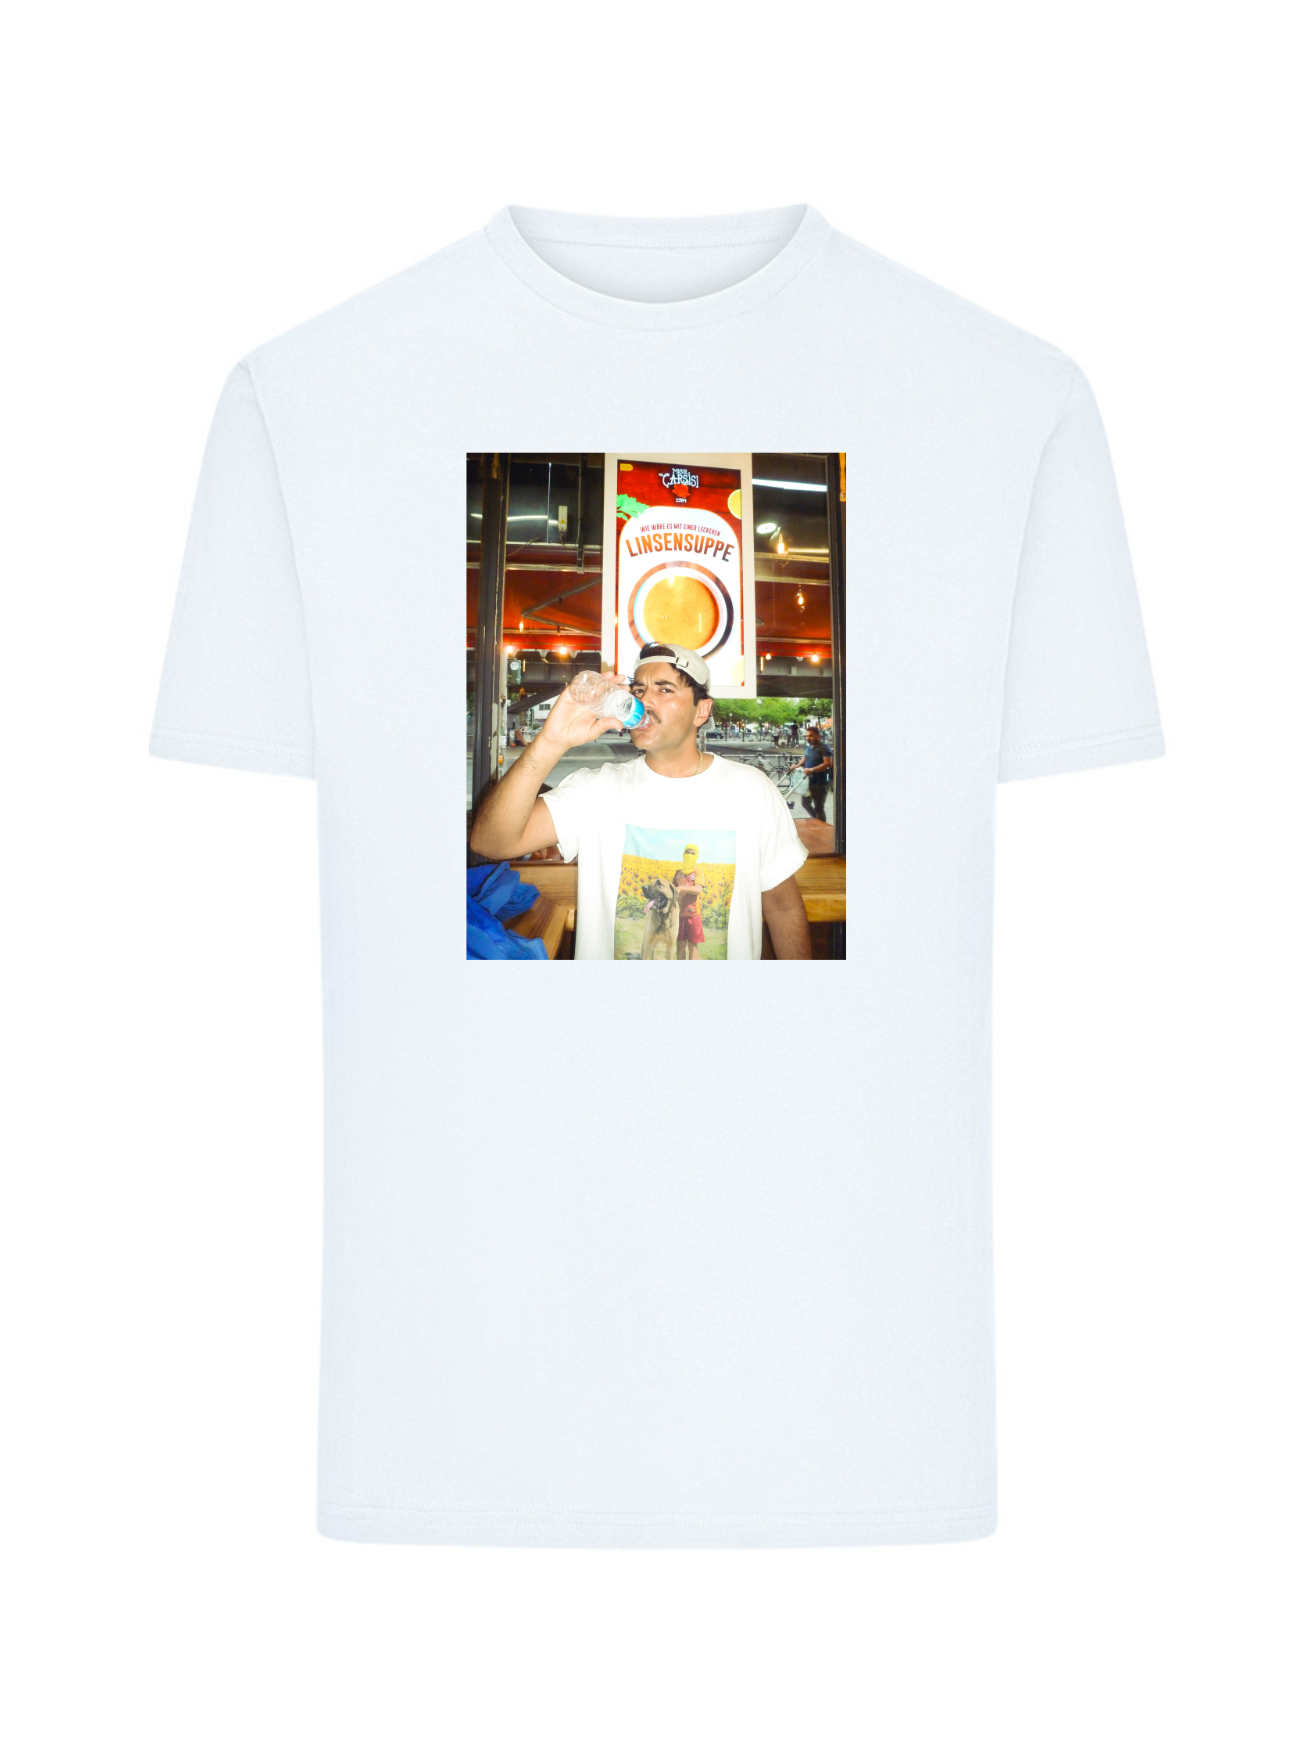 Chefket - Linsensuppe Stereotyp T-Shirt Weiß